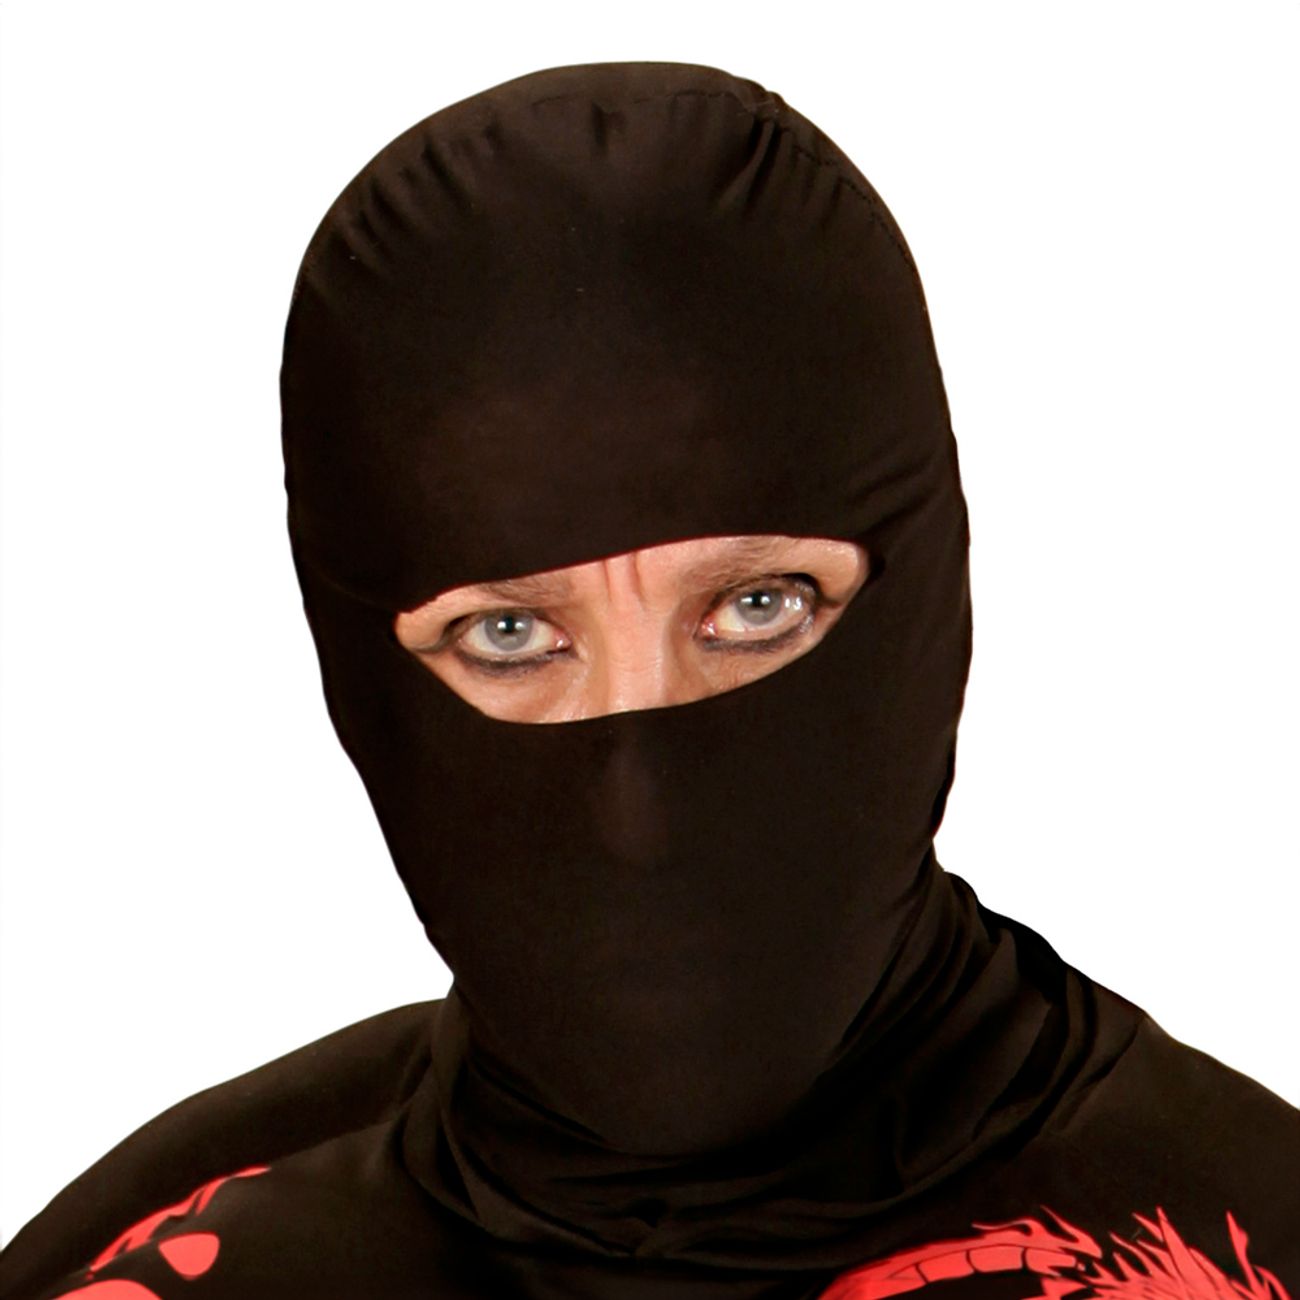 ninja-svart-mask-32950-2